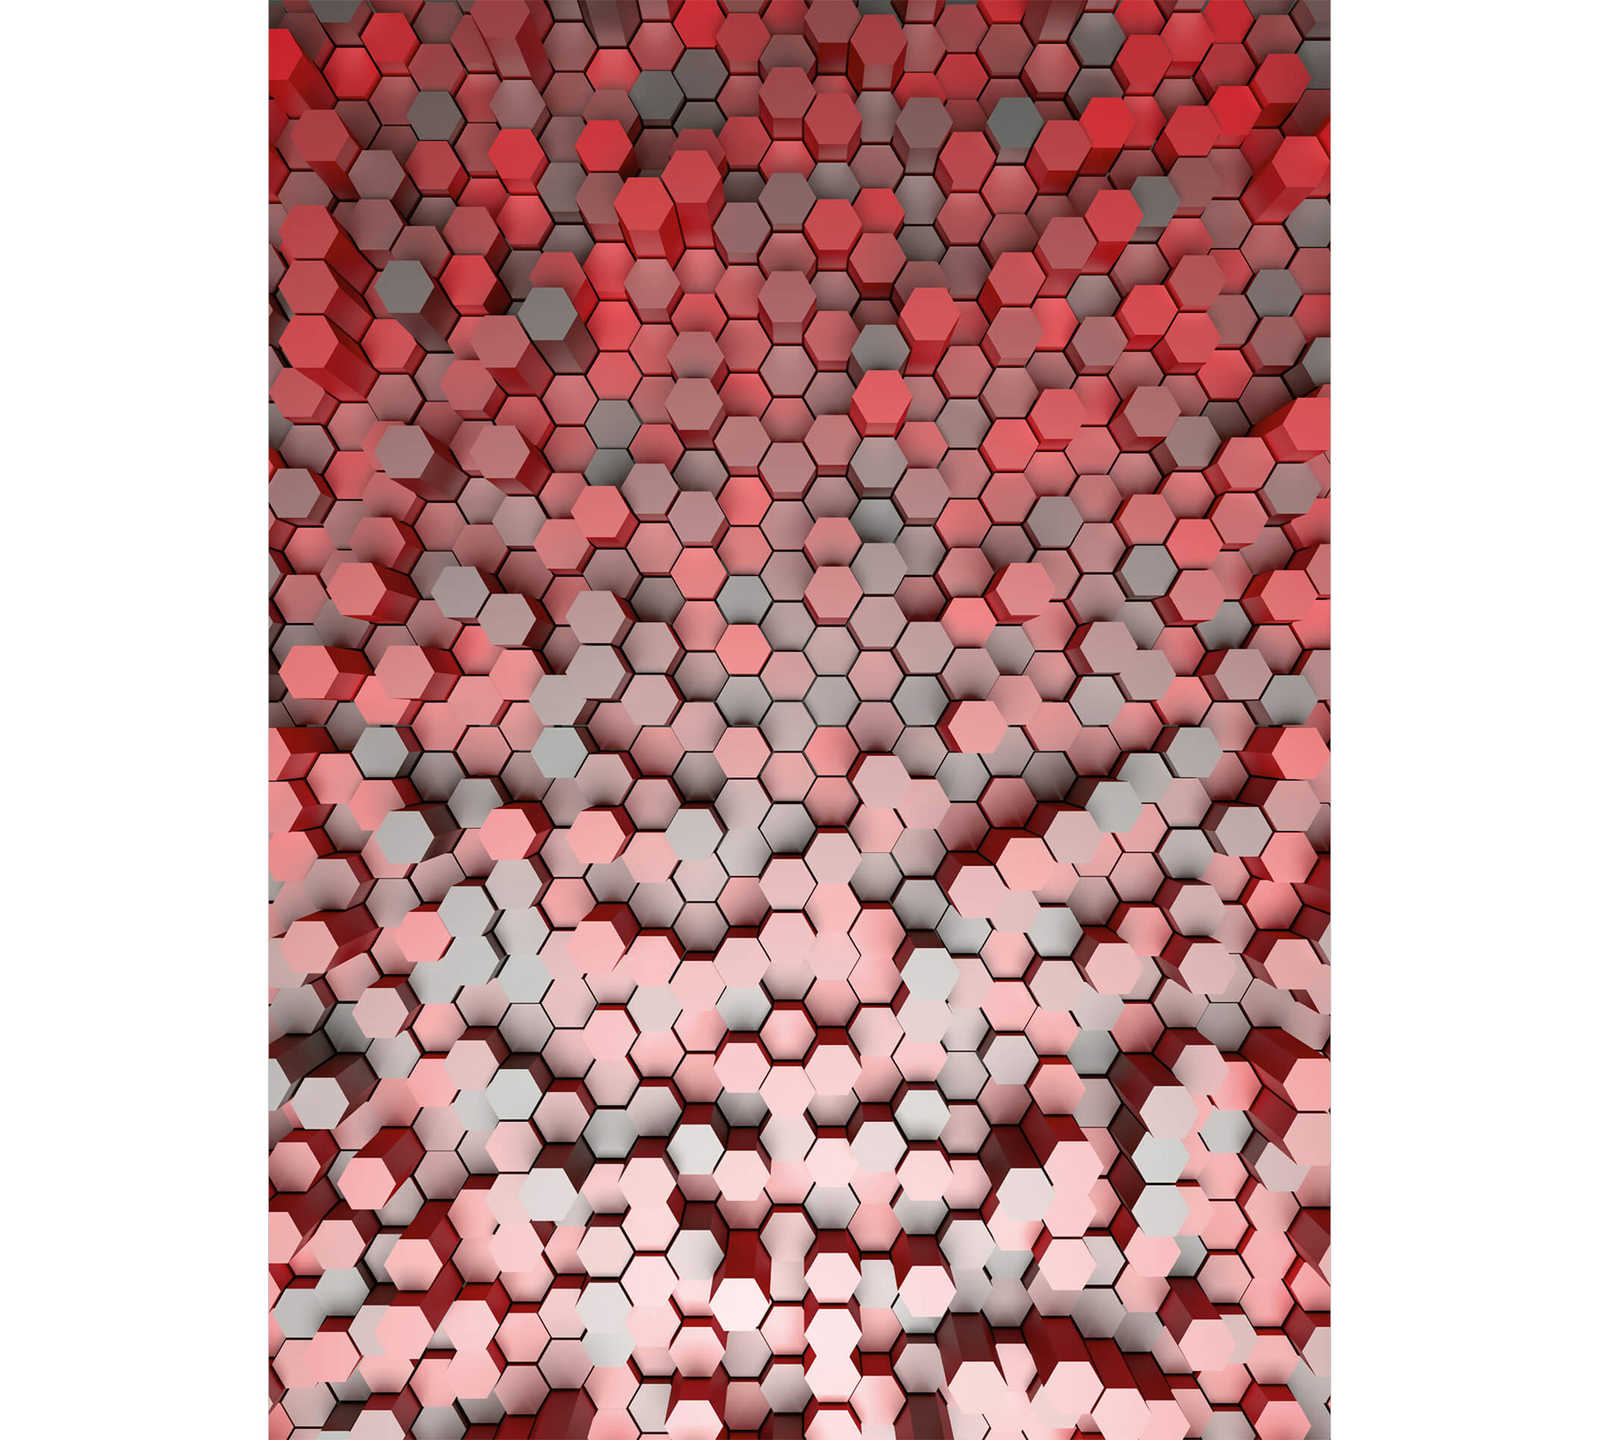         3D Photo wallpaper Hexagon graphic design - red, grey
    